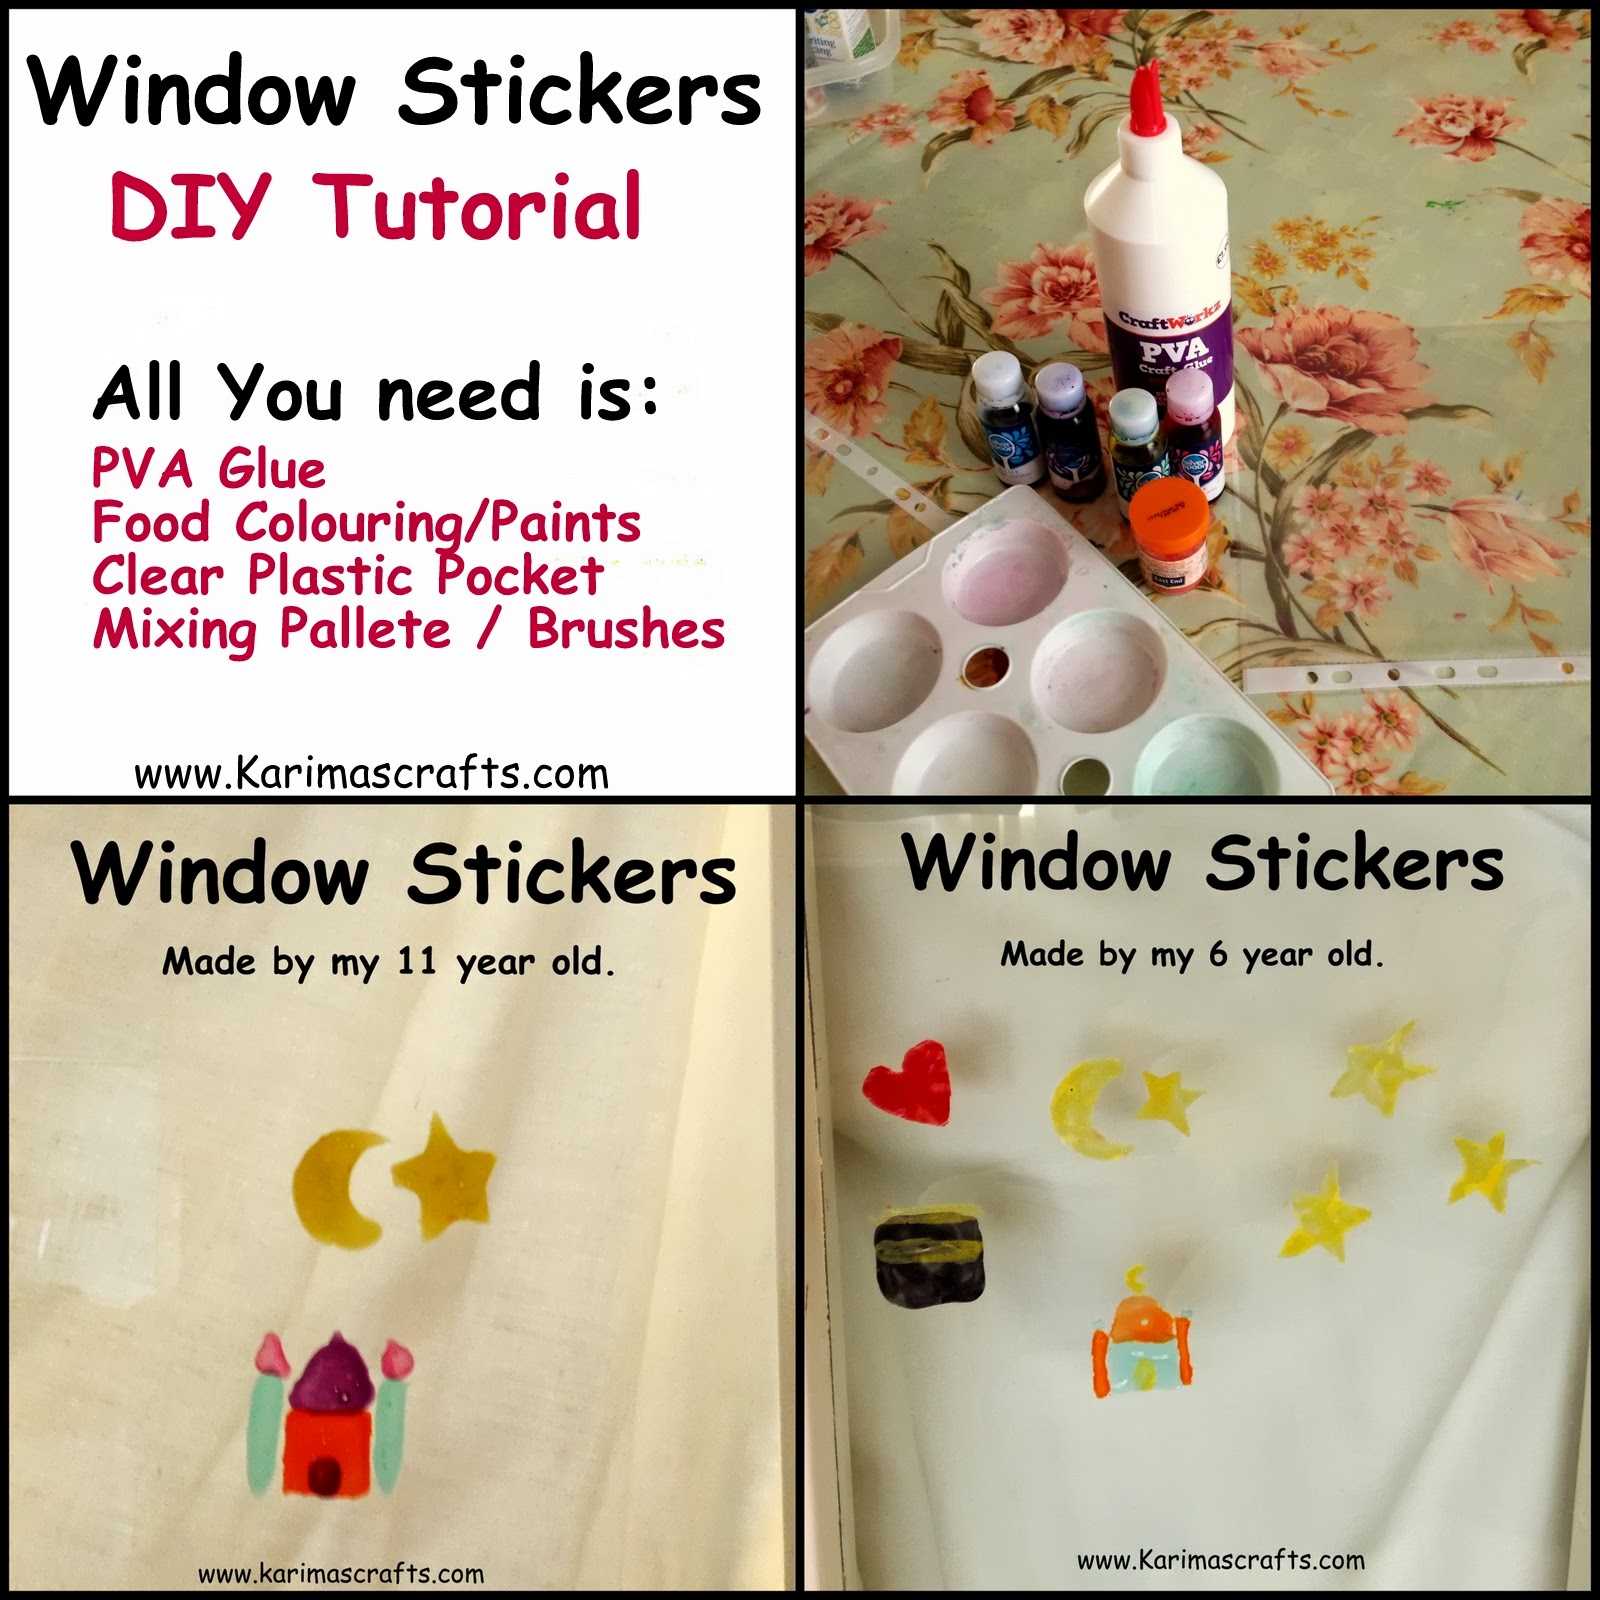 Five Pillars Of islam Worksheet Also Karima S Crafts Window Stickers Diy Tutorial 30 Days Of Ramadan